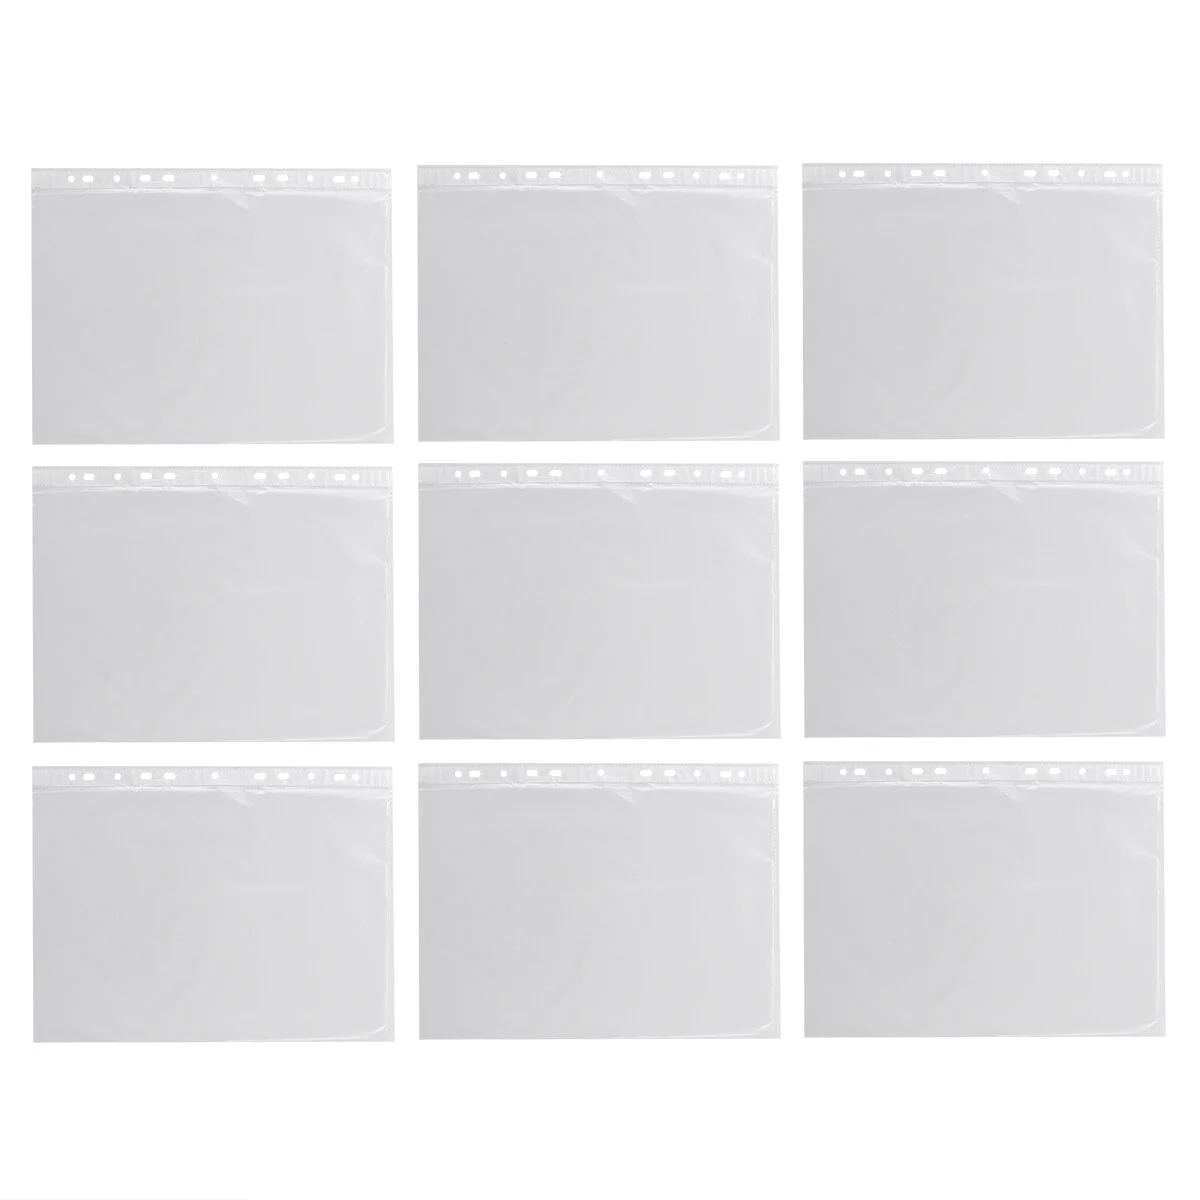 

100 Pcs Stationery Clear Binder PP Files Protective Films Envelope Folders Lightweight